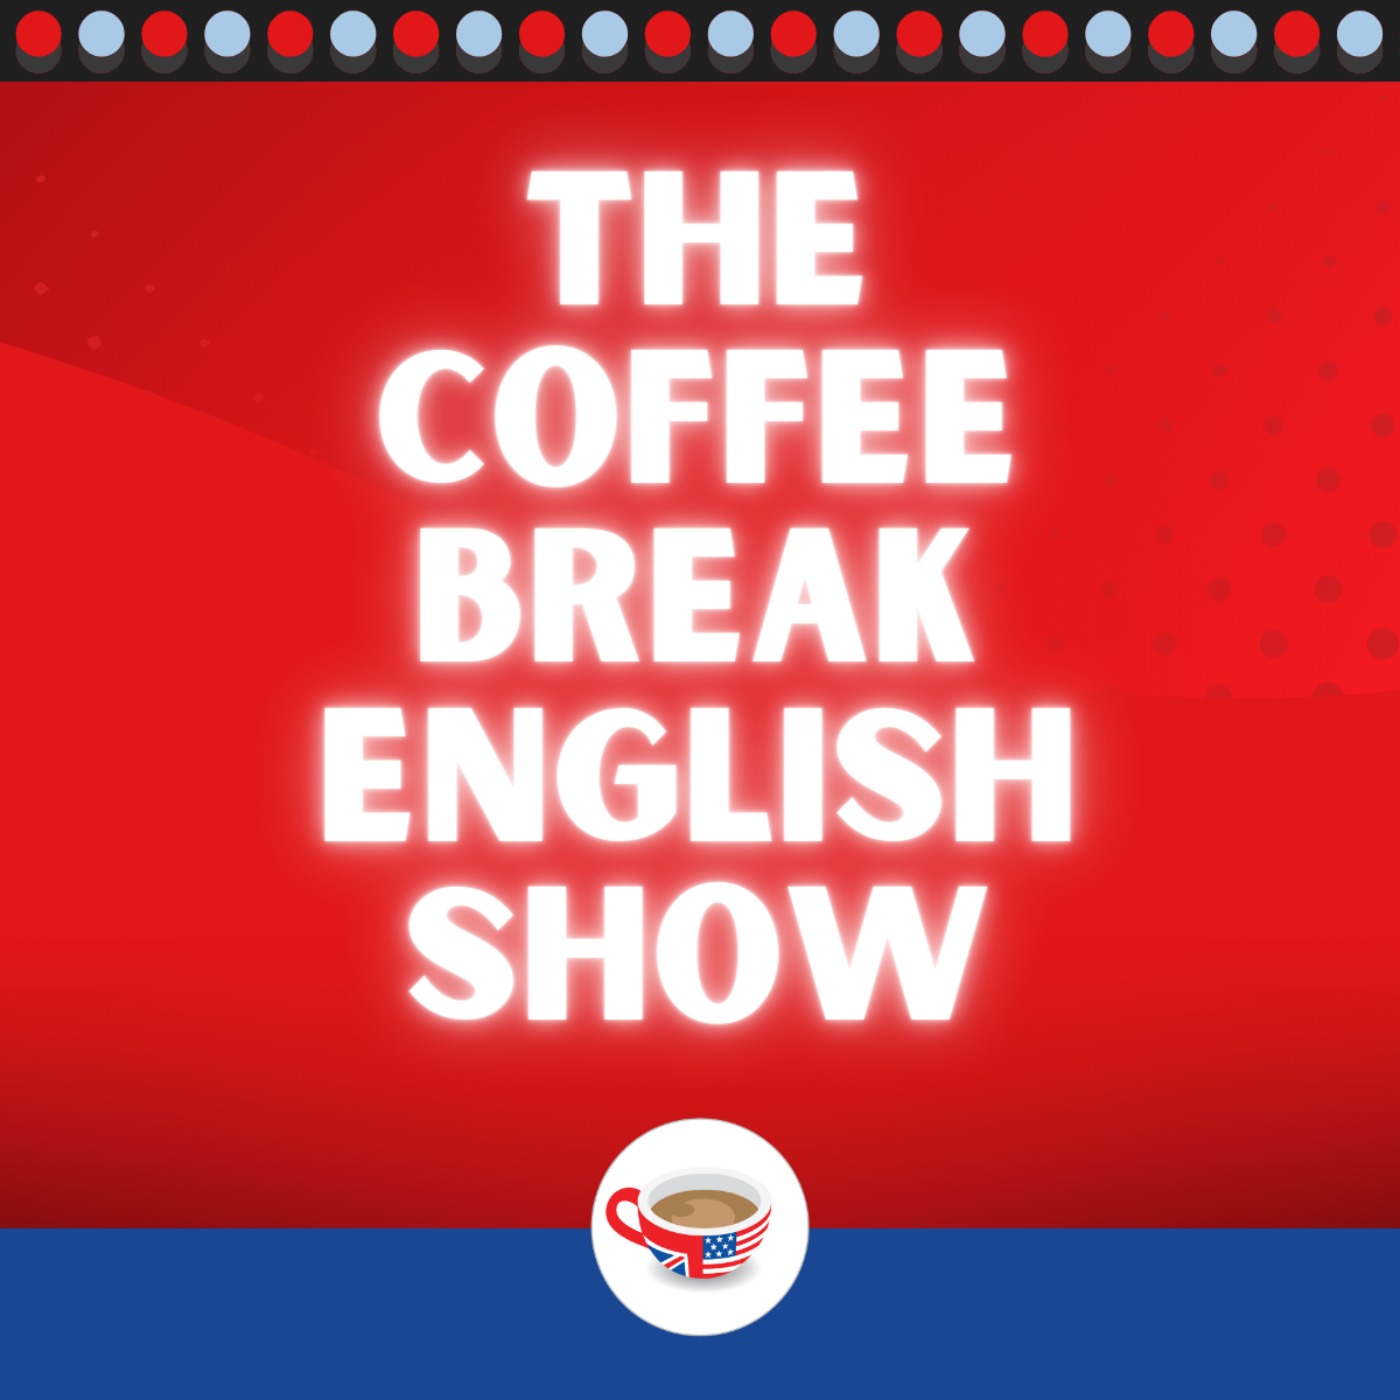 Introducing the Coffee Break English Show